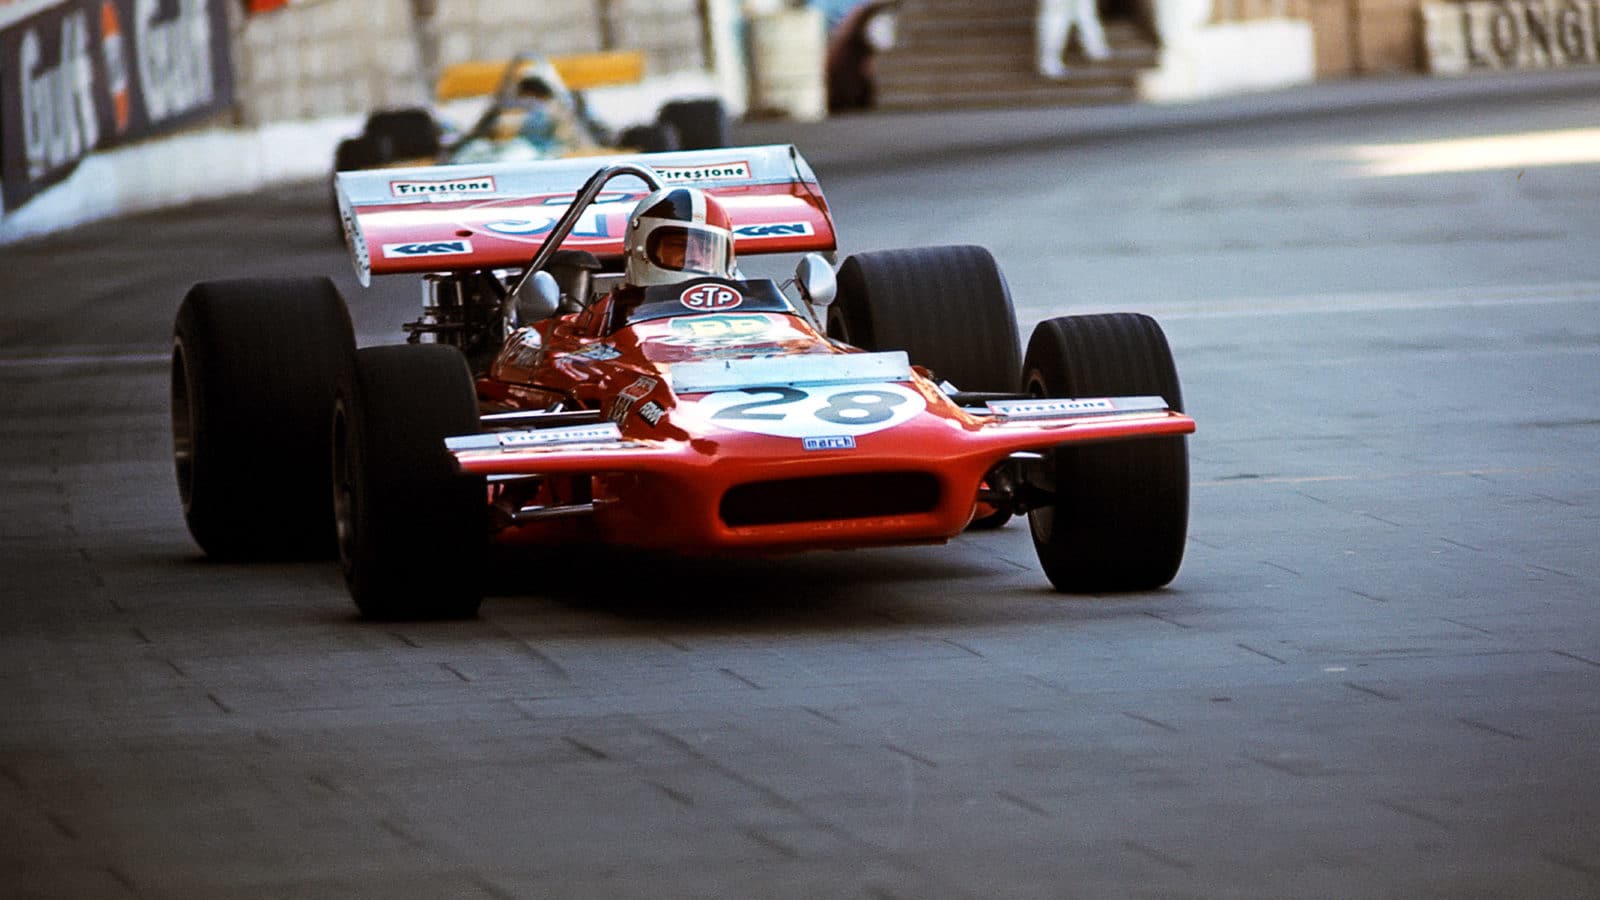 Chris Amon, Grand Prix of Monaco, Circuit de Monaco, 10 May 1970. (Photo by Bernard Cahier/Getty Images)